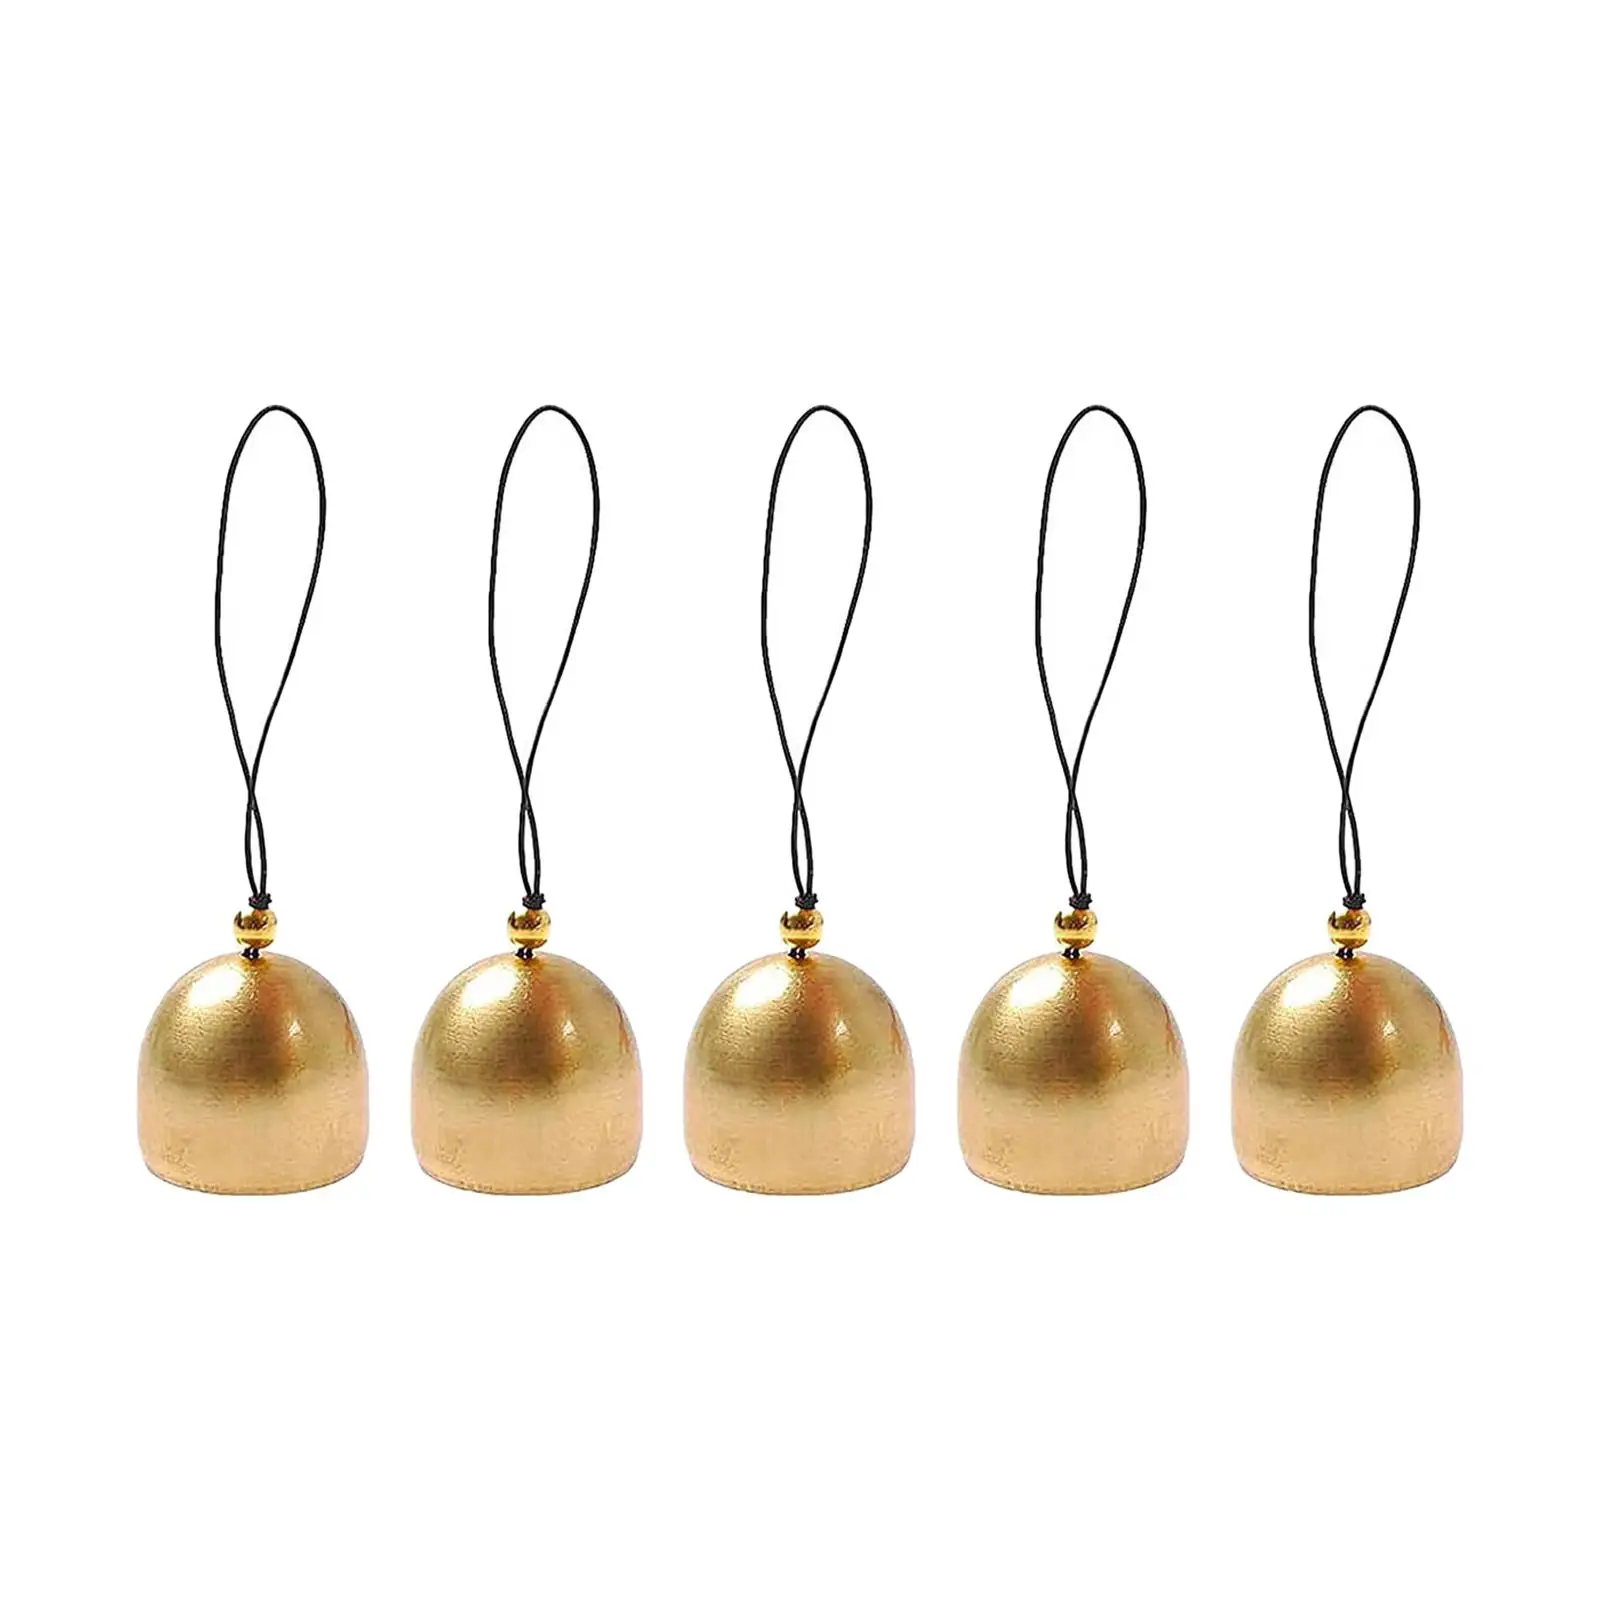 5x Copper Bell Small Brass Bells Mini bell DIY craft Front Door Wedding Party